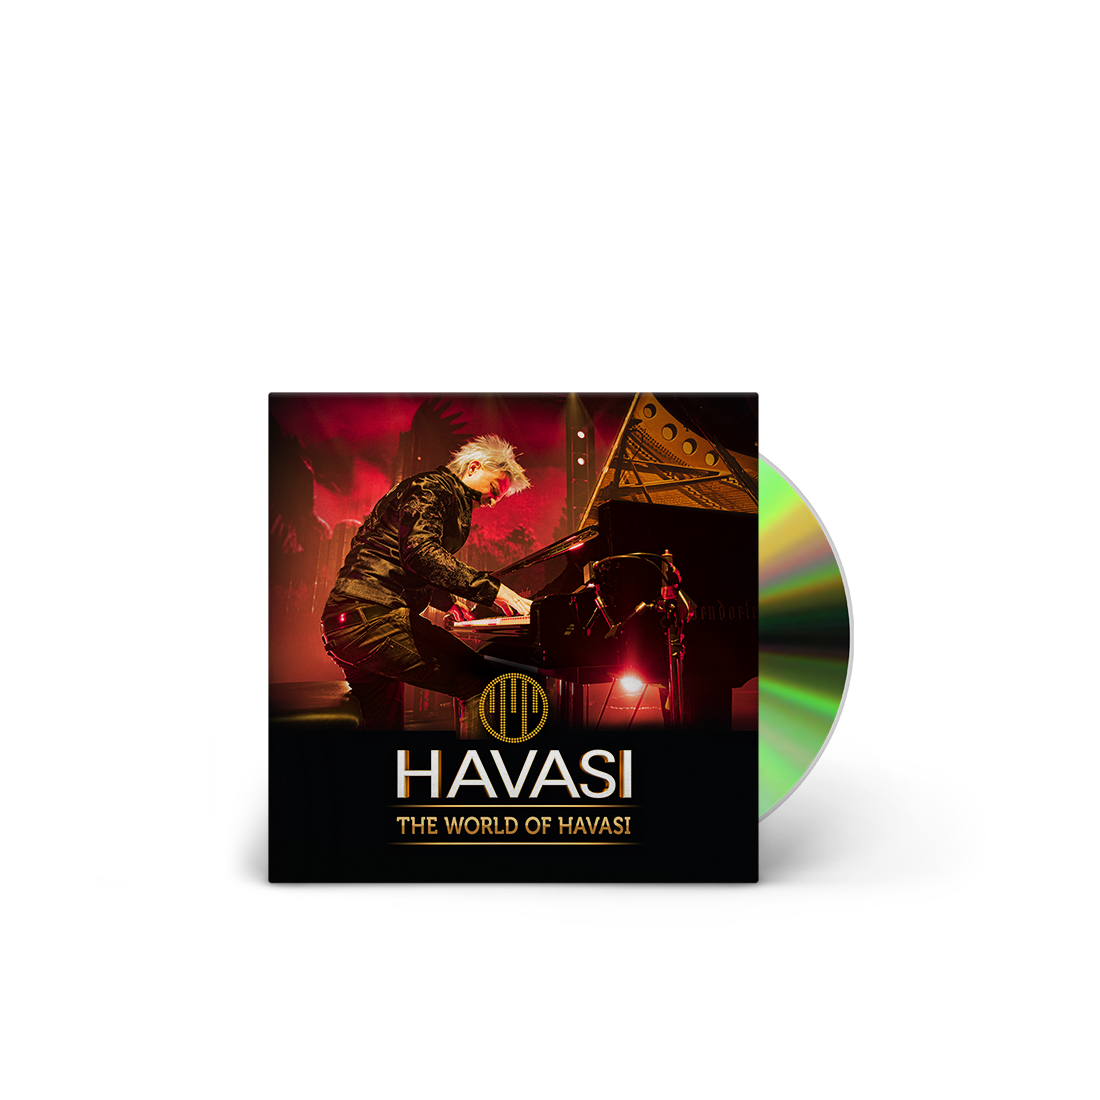 The World of Havasi